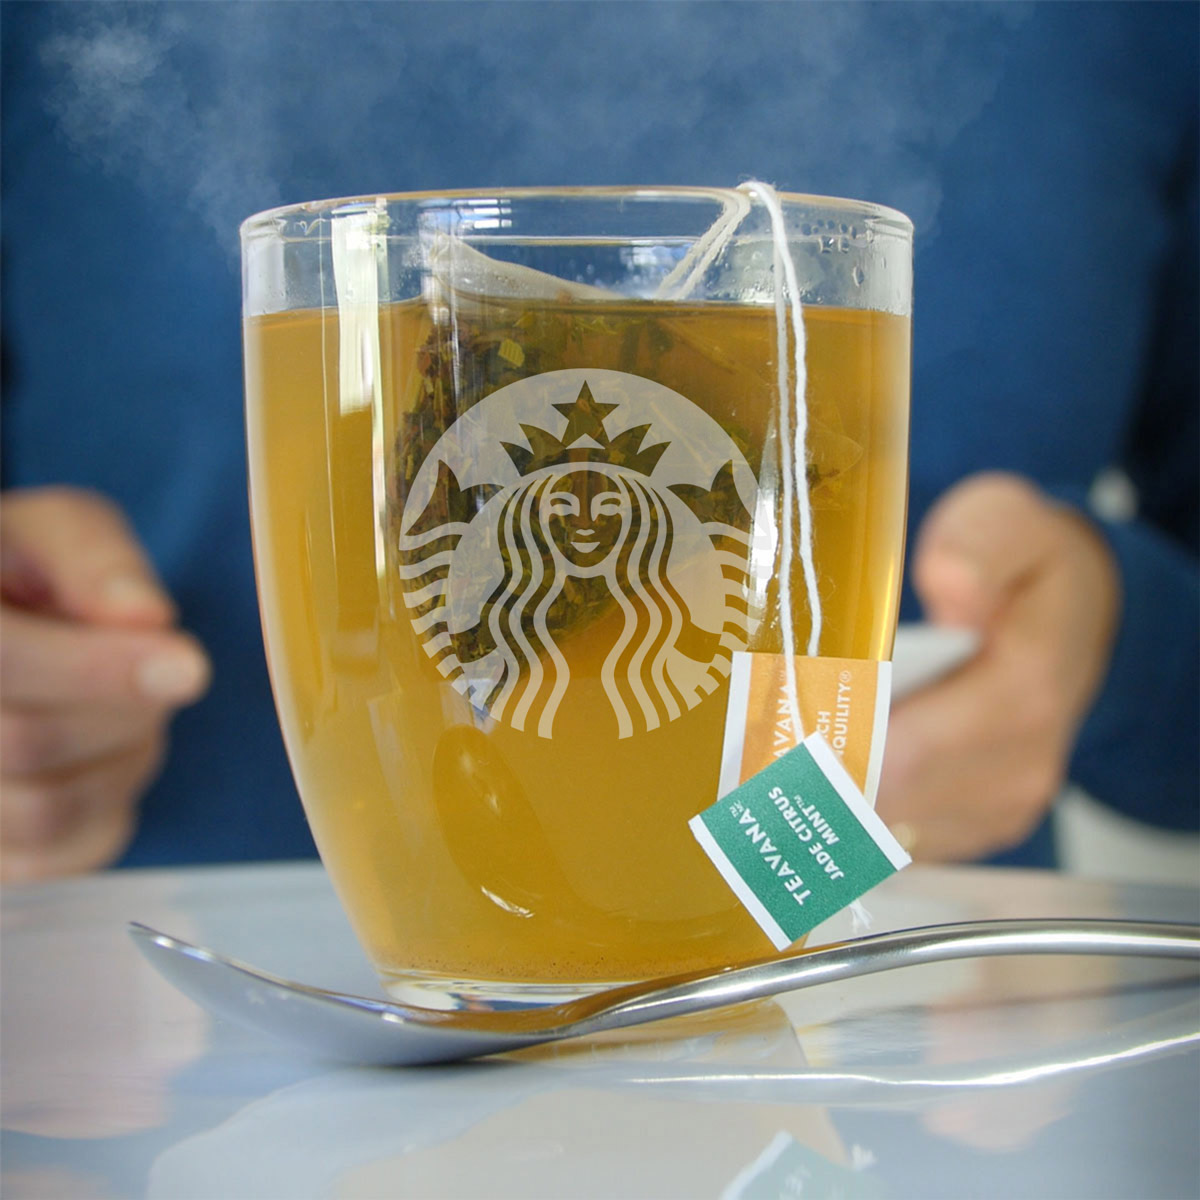 Starbucks Medicine Ball Tea - Cheaper at Home